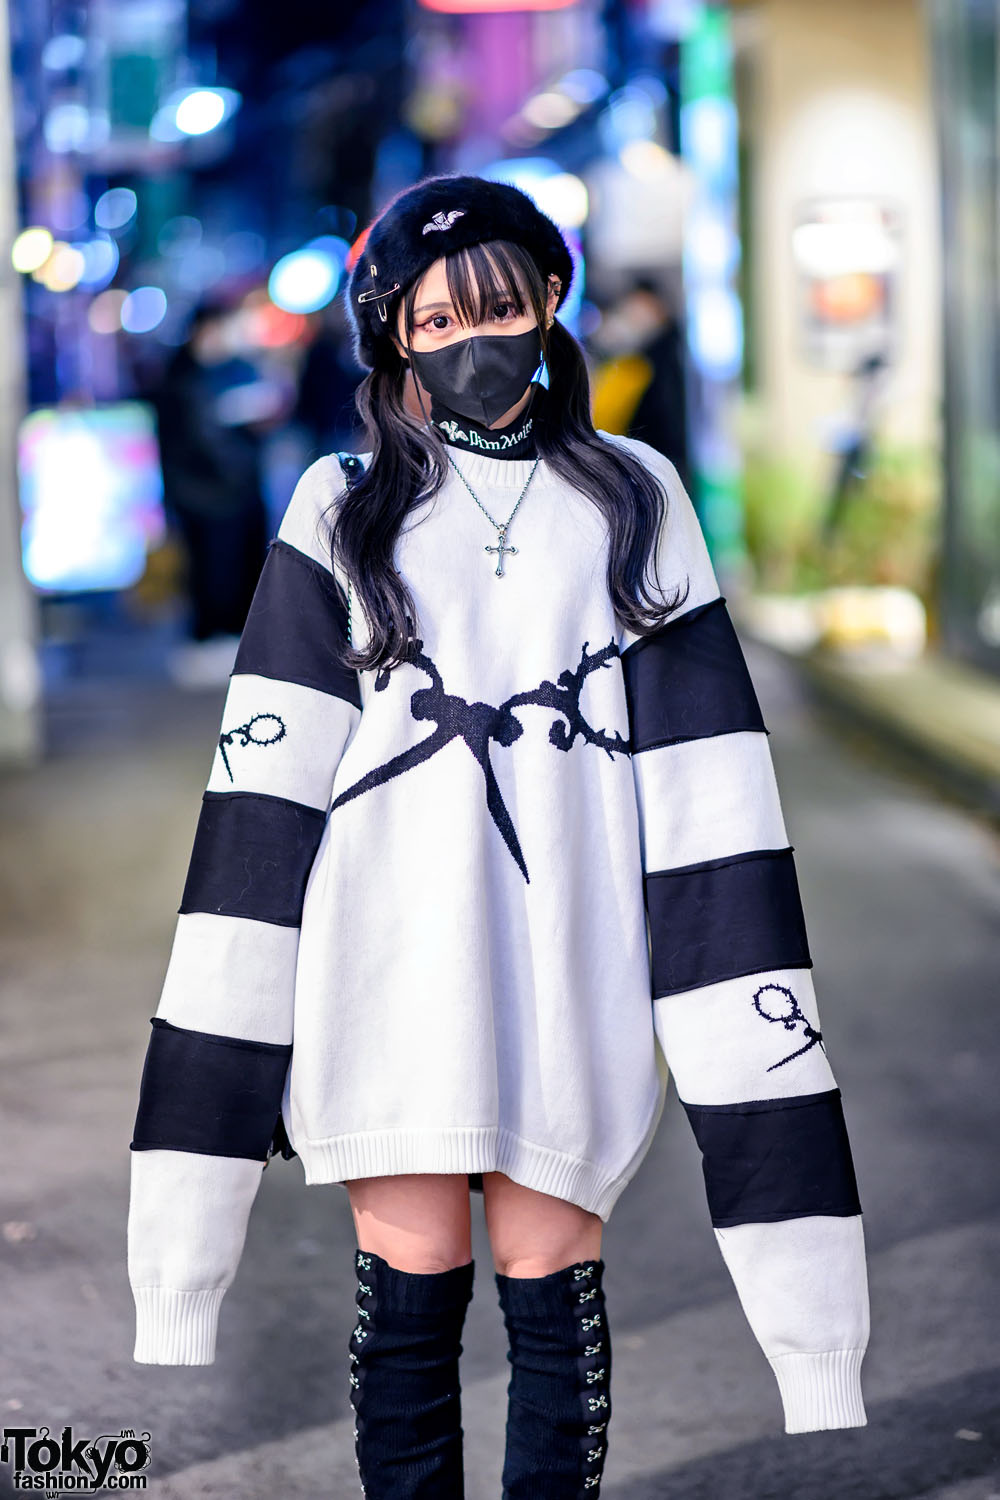 Japanese fashion industry staffer and freelance model Cham (@daaaaaaicham)  on the street in Harajuku wearing layered oversized tops by Ik